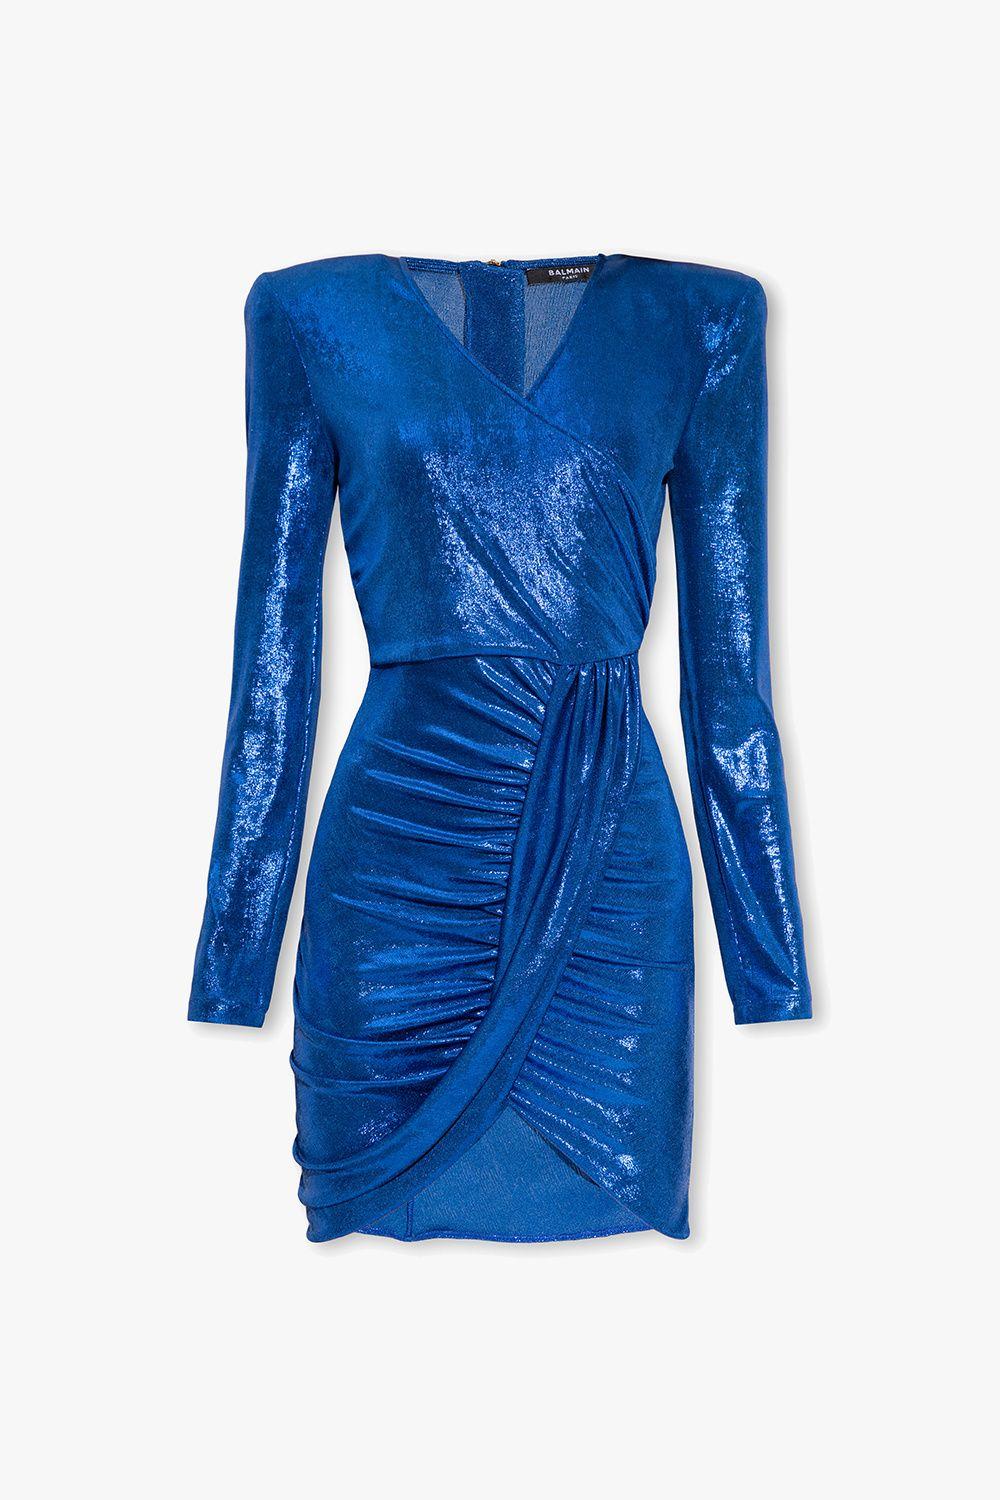 Balmain Draped Dress in Blue | Lyst